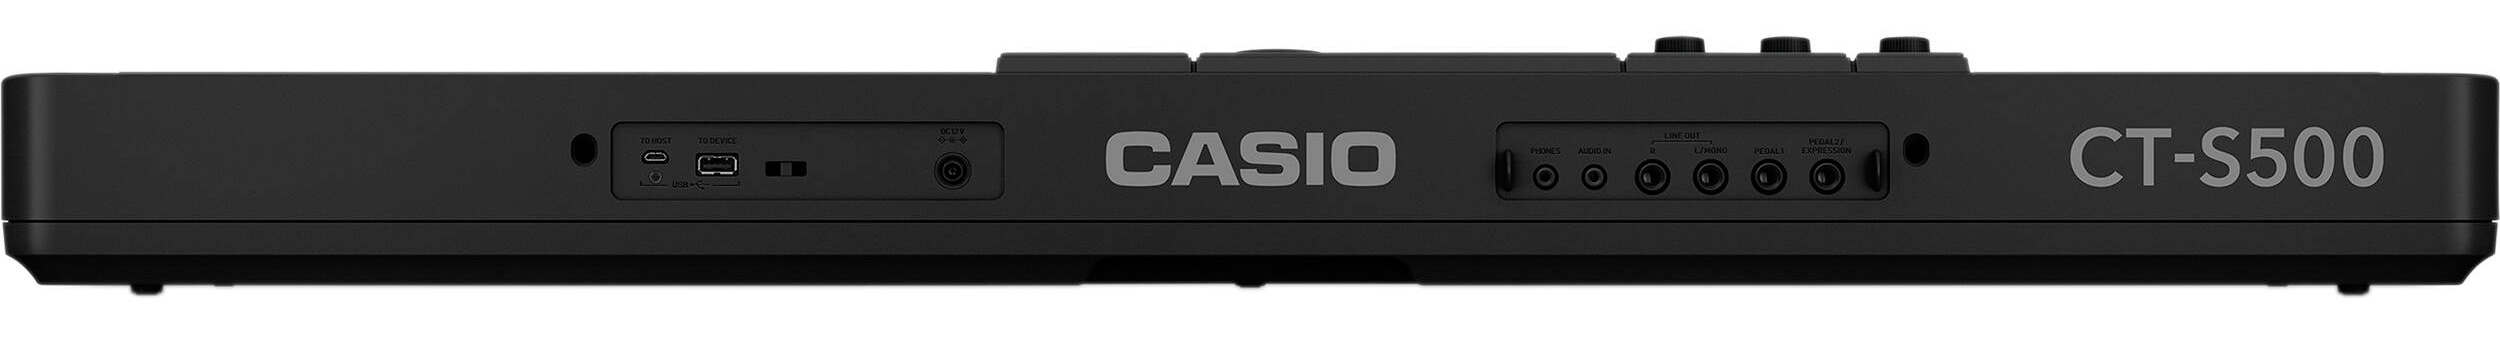 Casio CT-S500 по цене 48 750 ₽